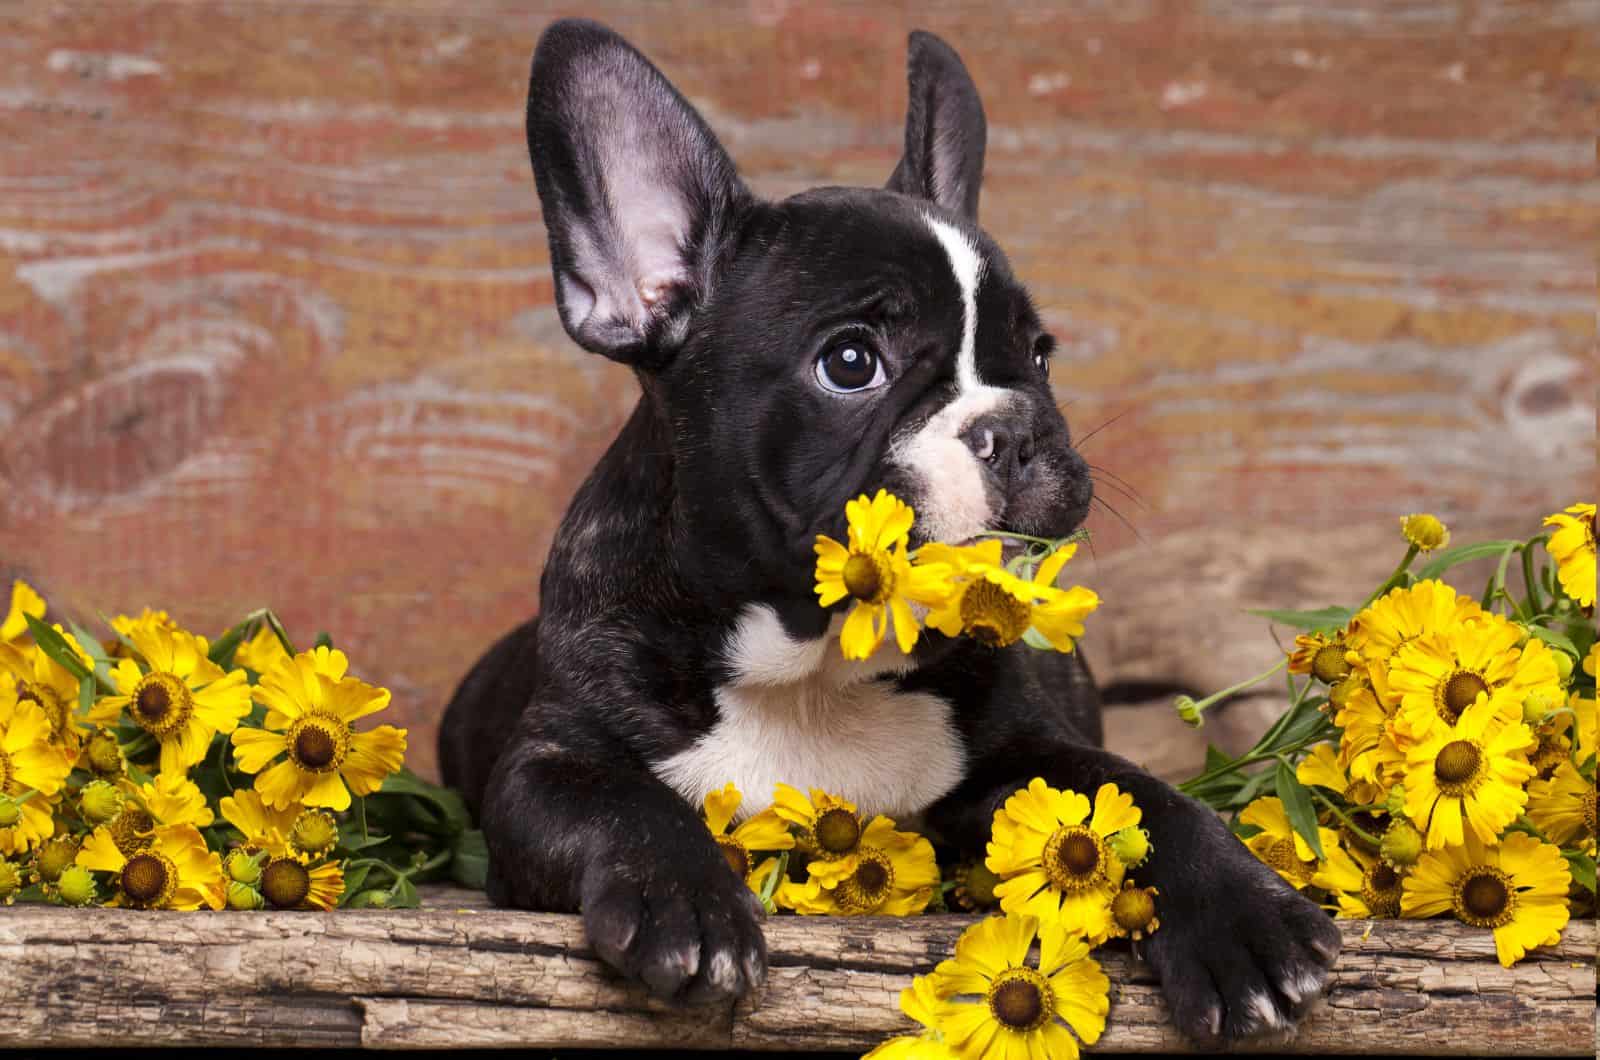 Mini French Bulldog posing with flowers